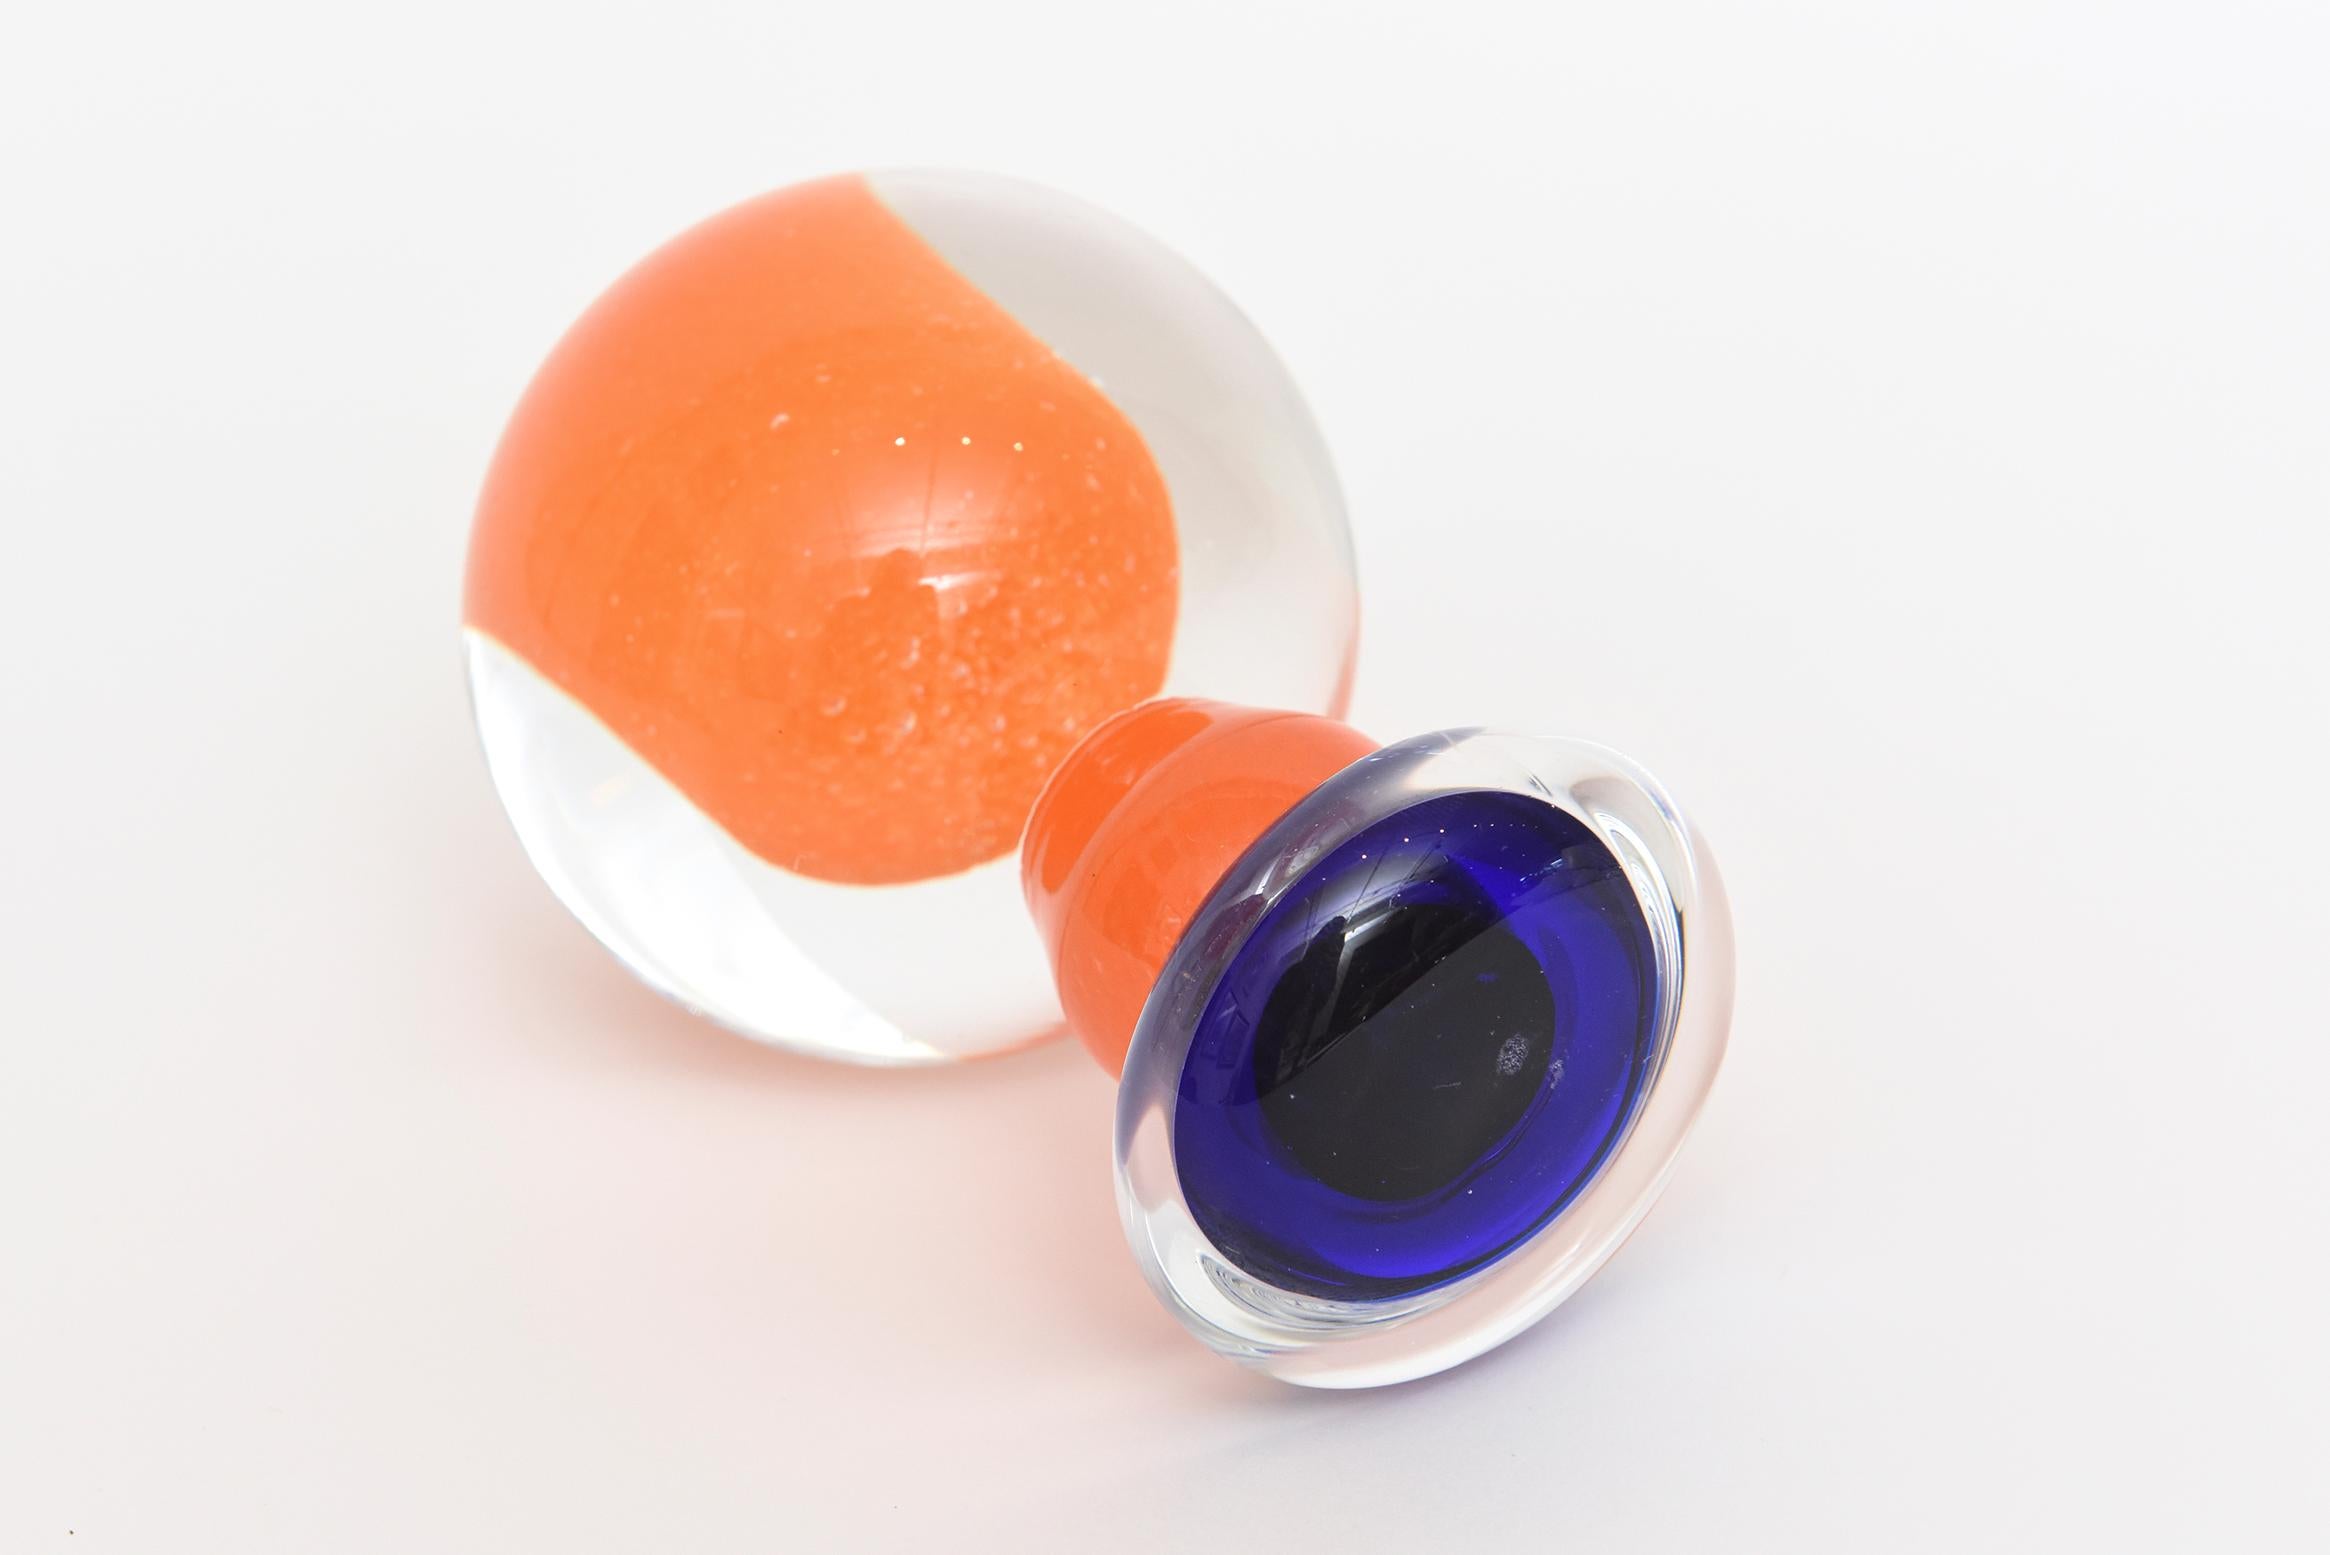 Kosta Boda Orange and Cobalt Blue Glass Paperweight Sculpture Desk Accessory 4